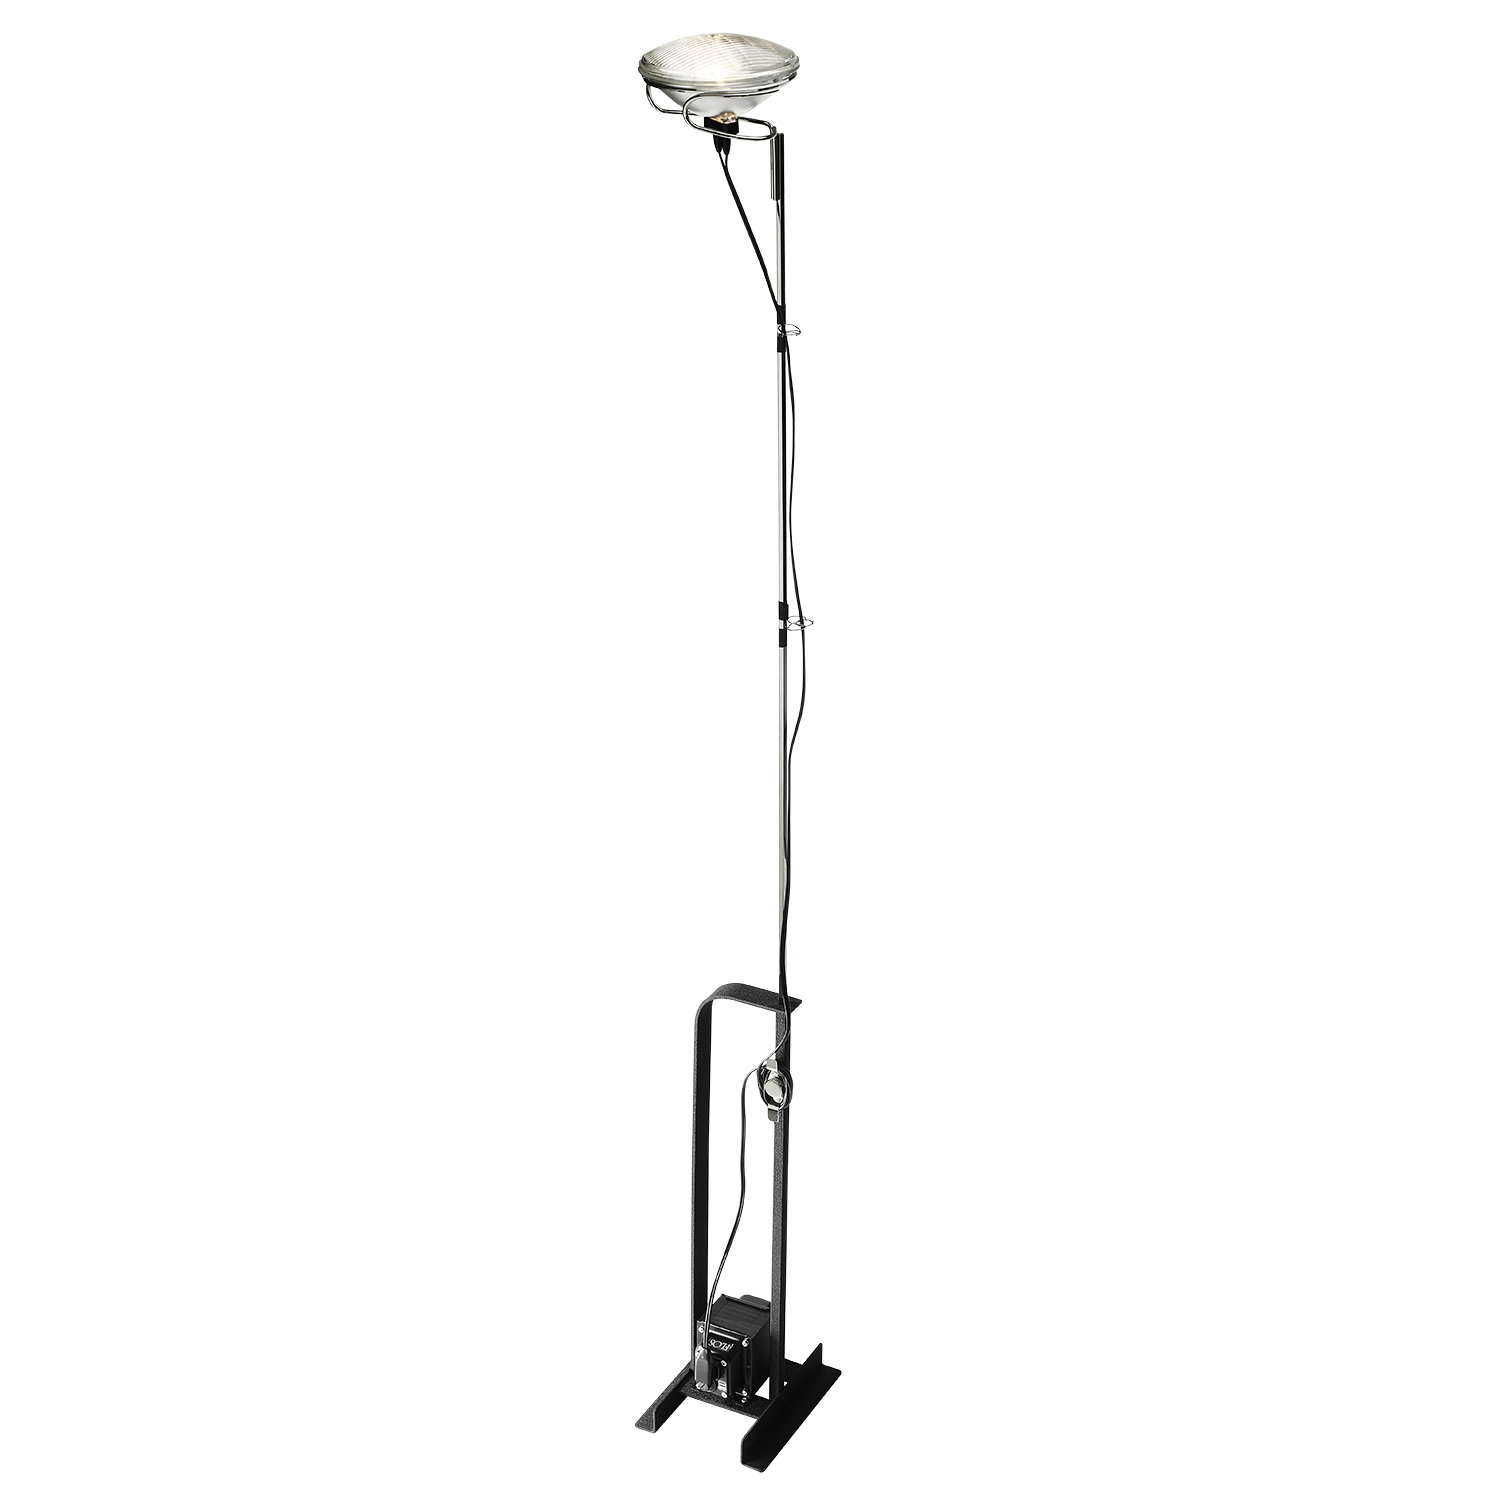 Redding lengte Cordelia Toio Floor Lamp Limited Edition, Matte Black - Flos @ RoyalDesign